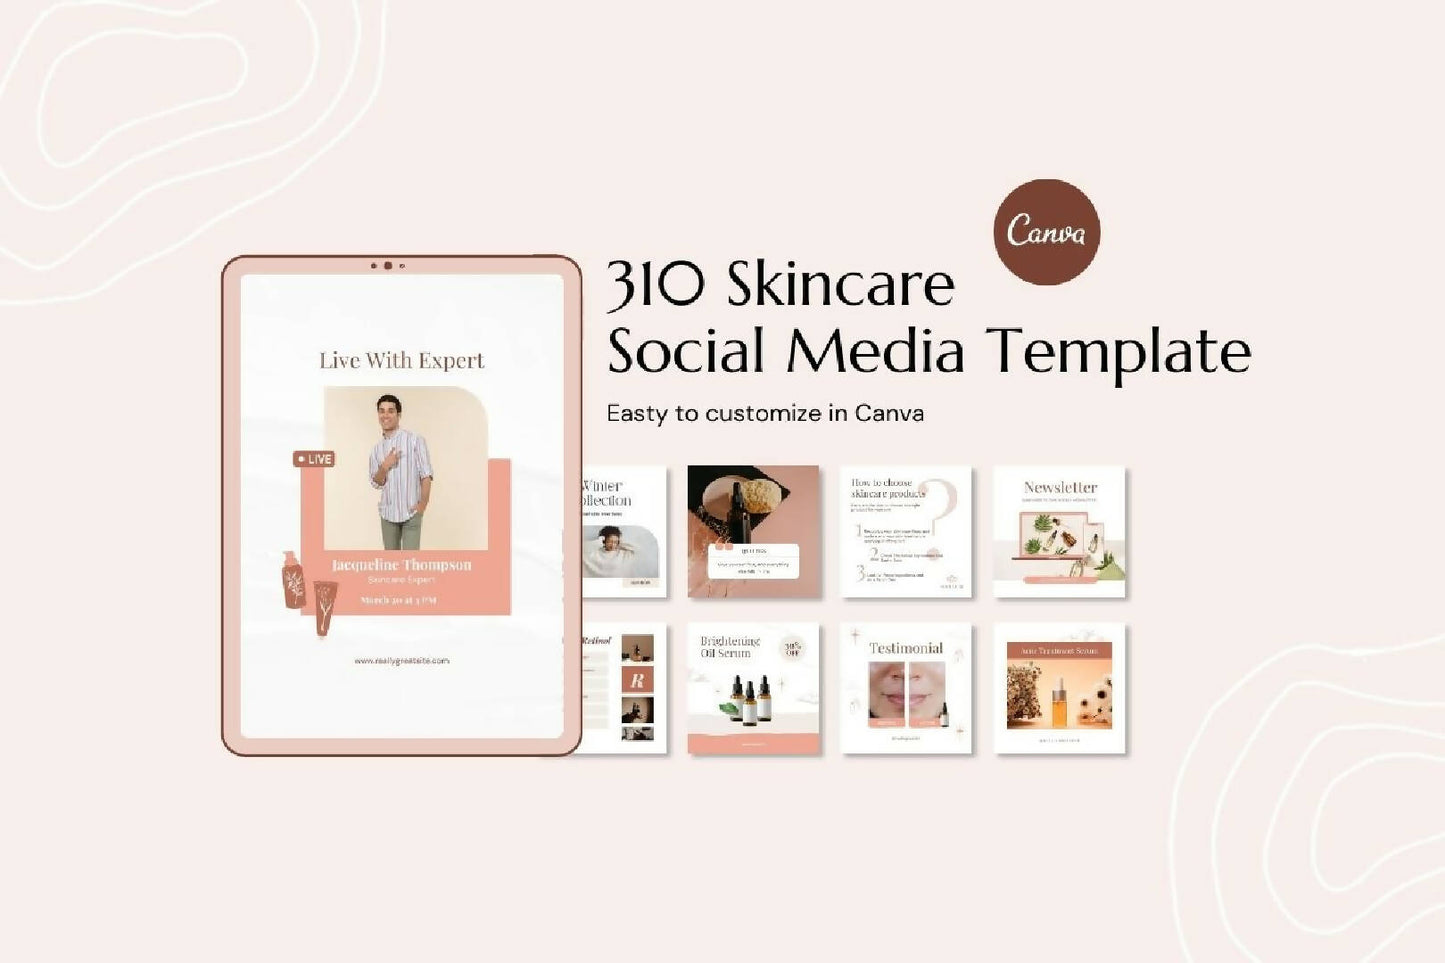 310 Skincare & Makeup For Social Media Template